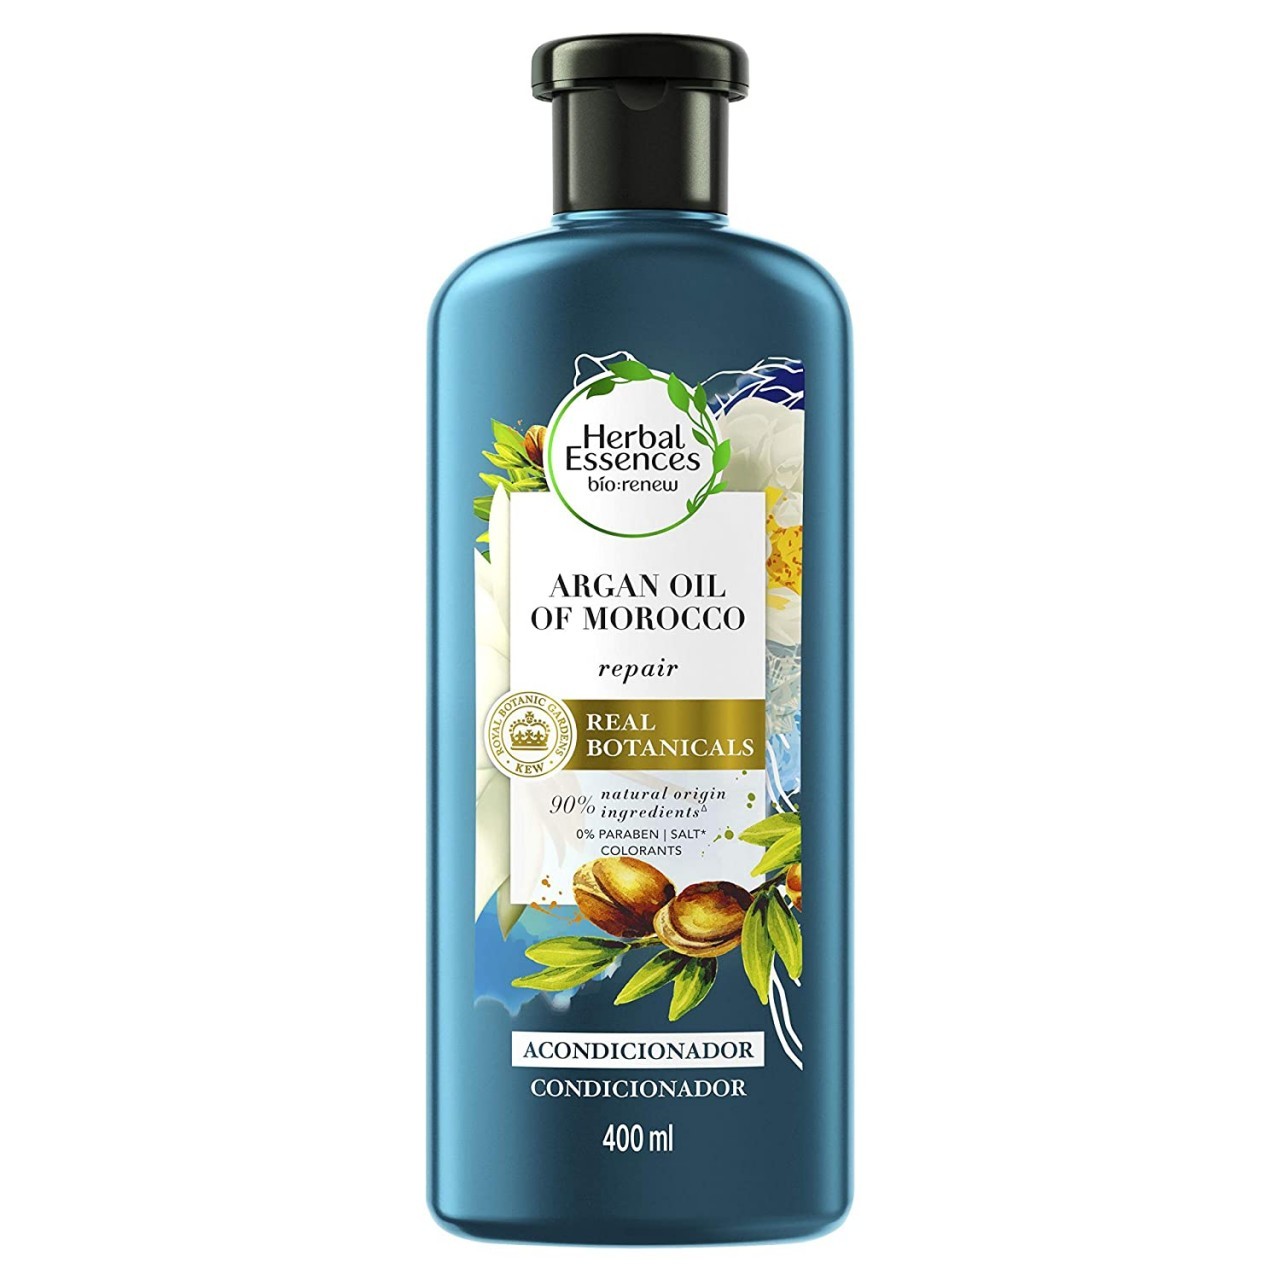 Herbal Essences bio:renew Argan Oil Conditioner 13.5 fl oz